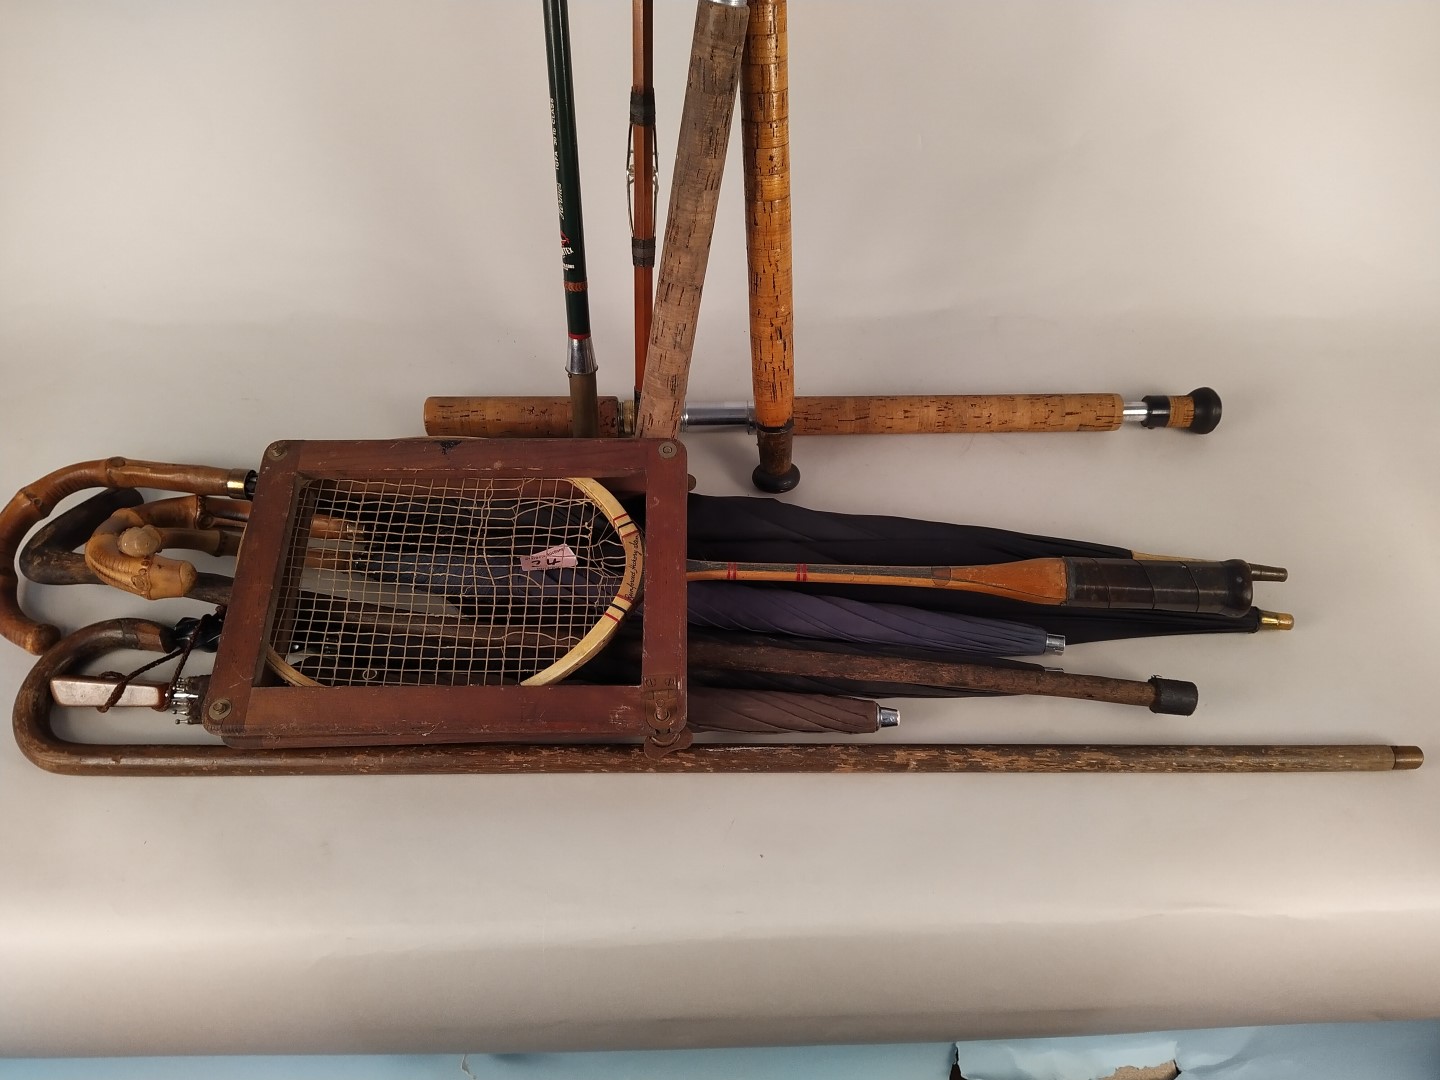 Vintage cane fishing rods, walking sticks, - Image 2 of 3